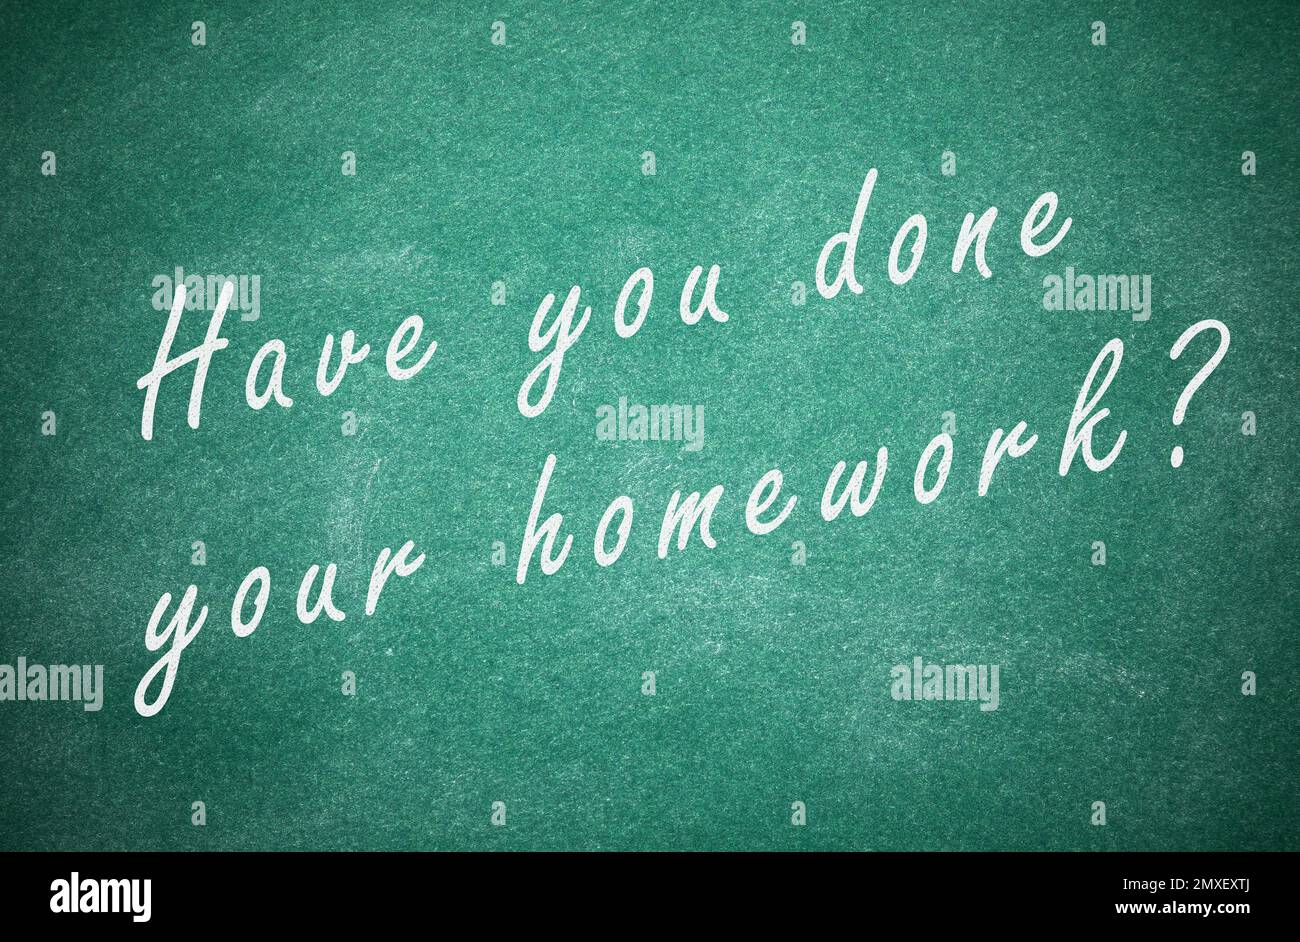 do your homework wallpaper